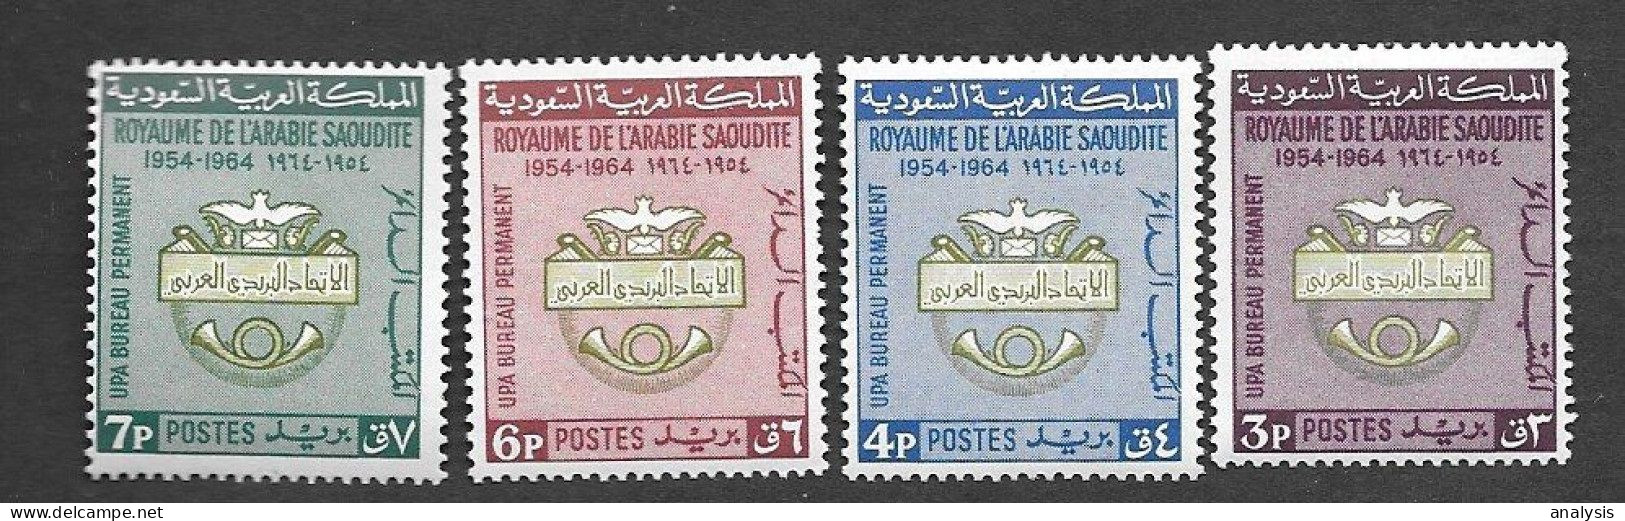 Saudi Arabia Arab Postal Union 4 Stamps 1964 MNH - Saudi Arabia